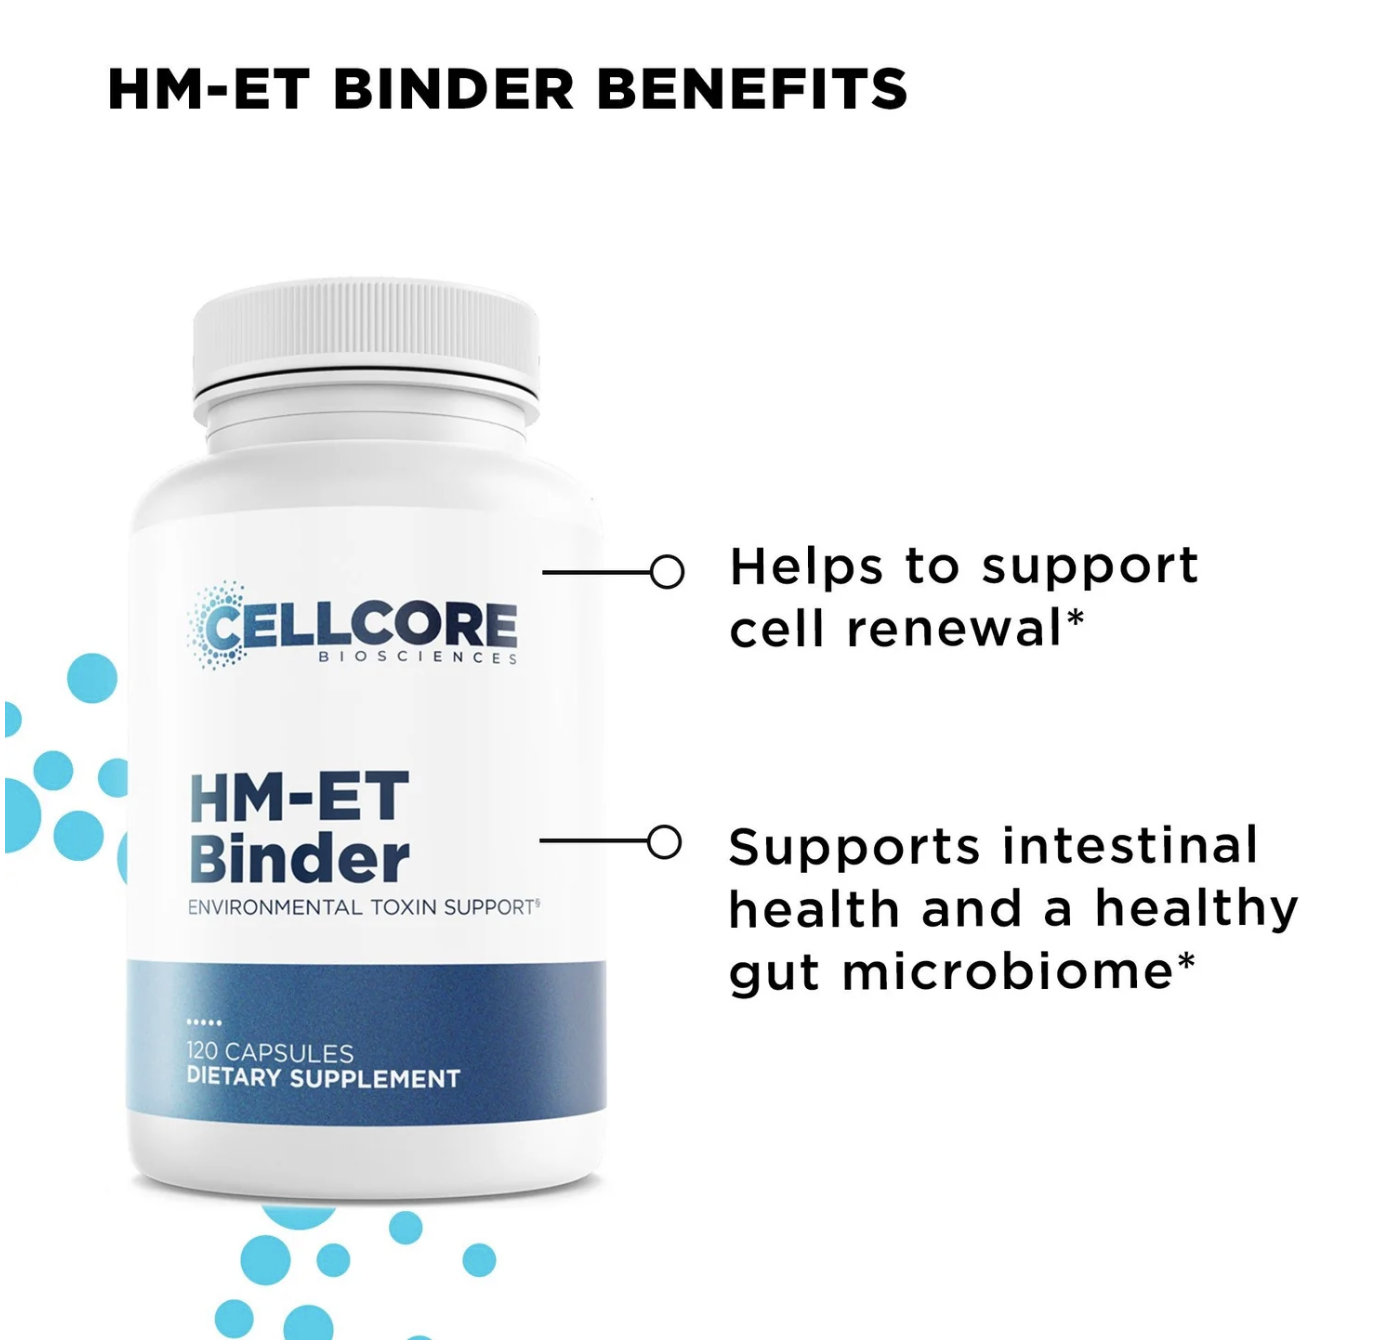 CellCore Detox Support Kit